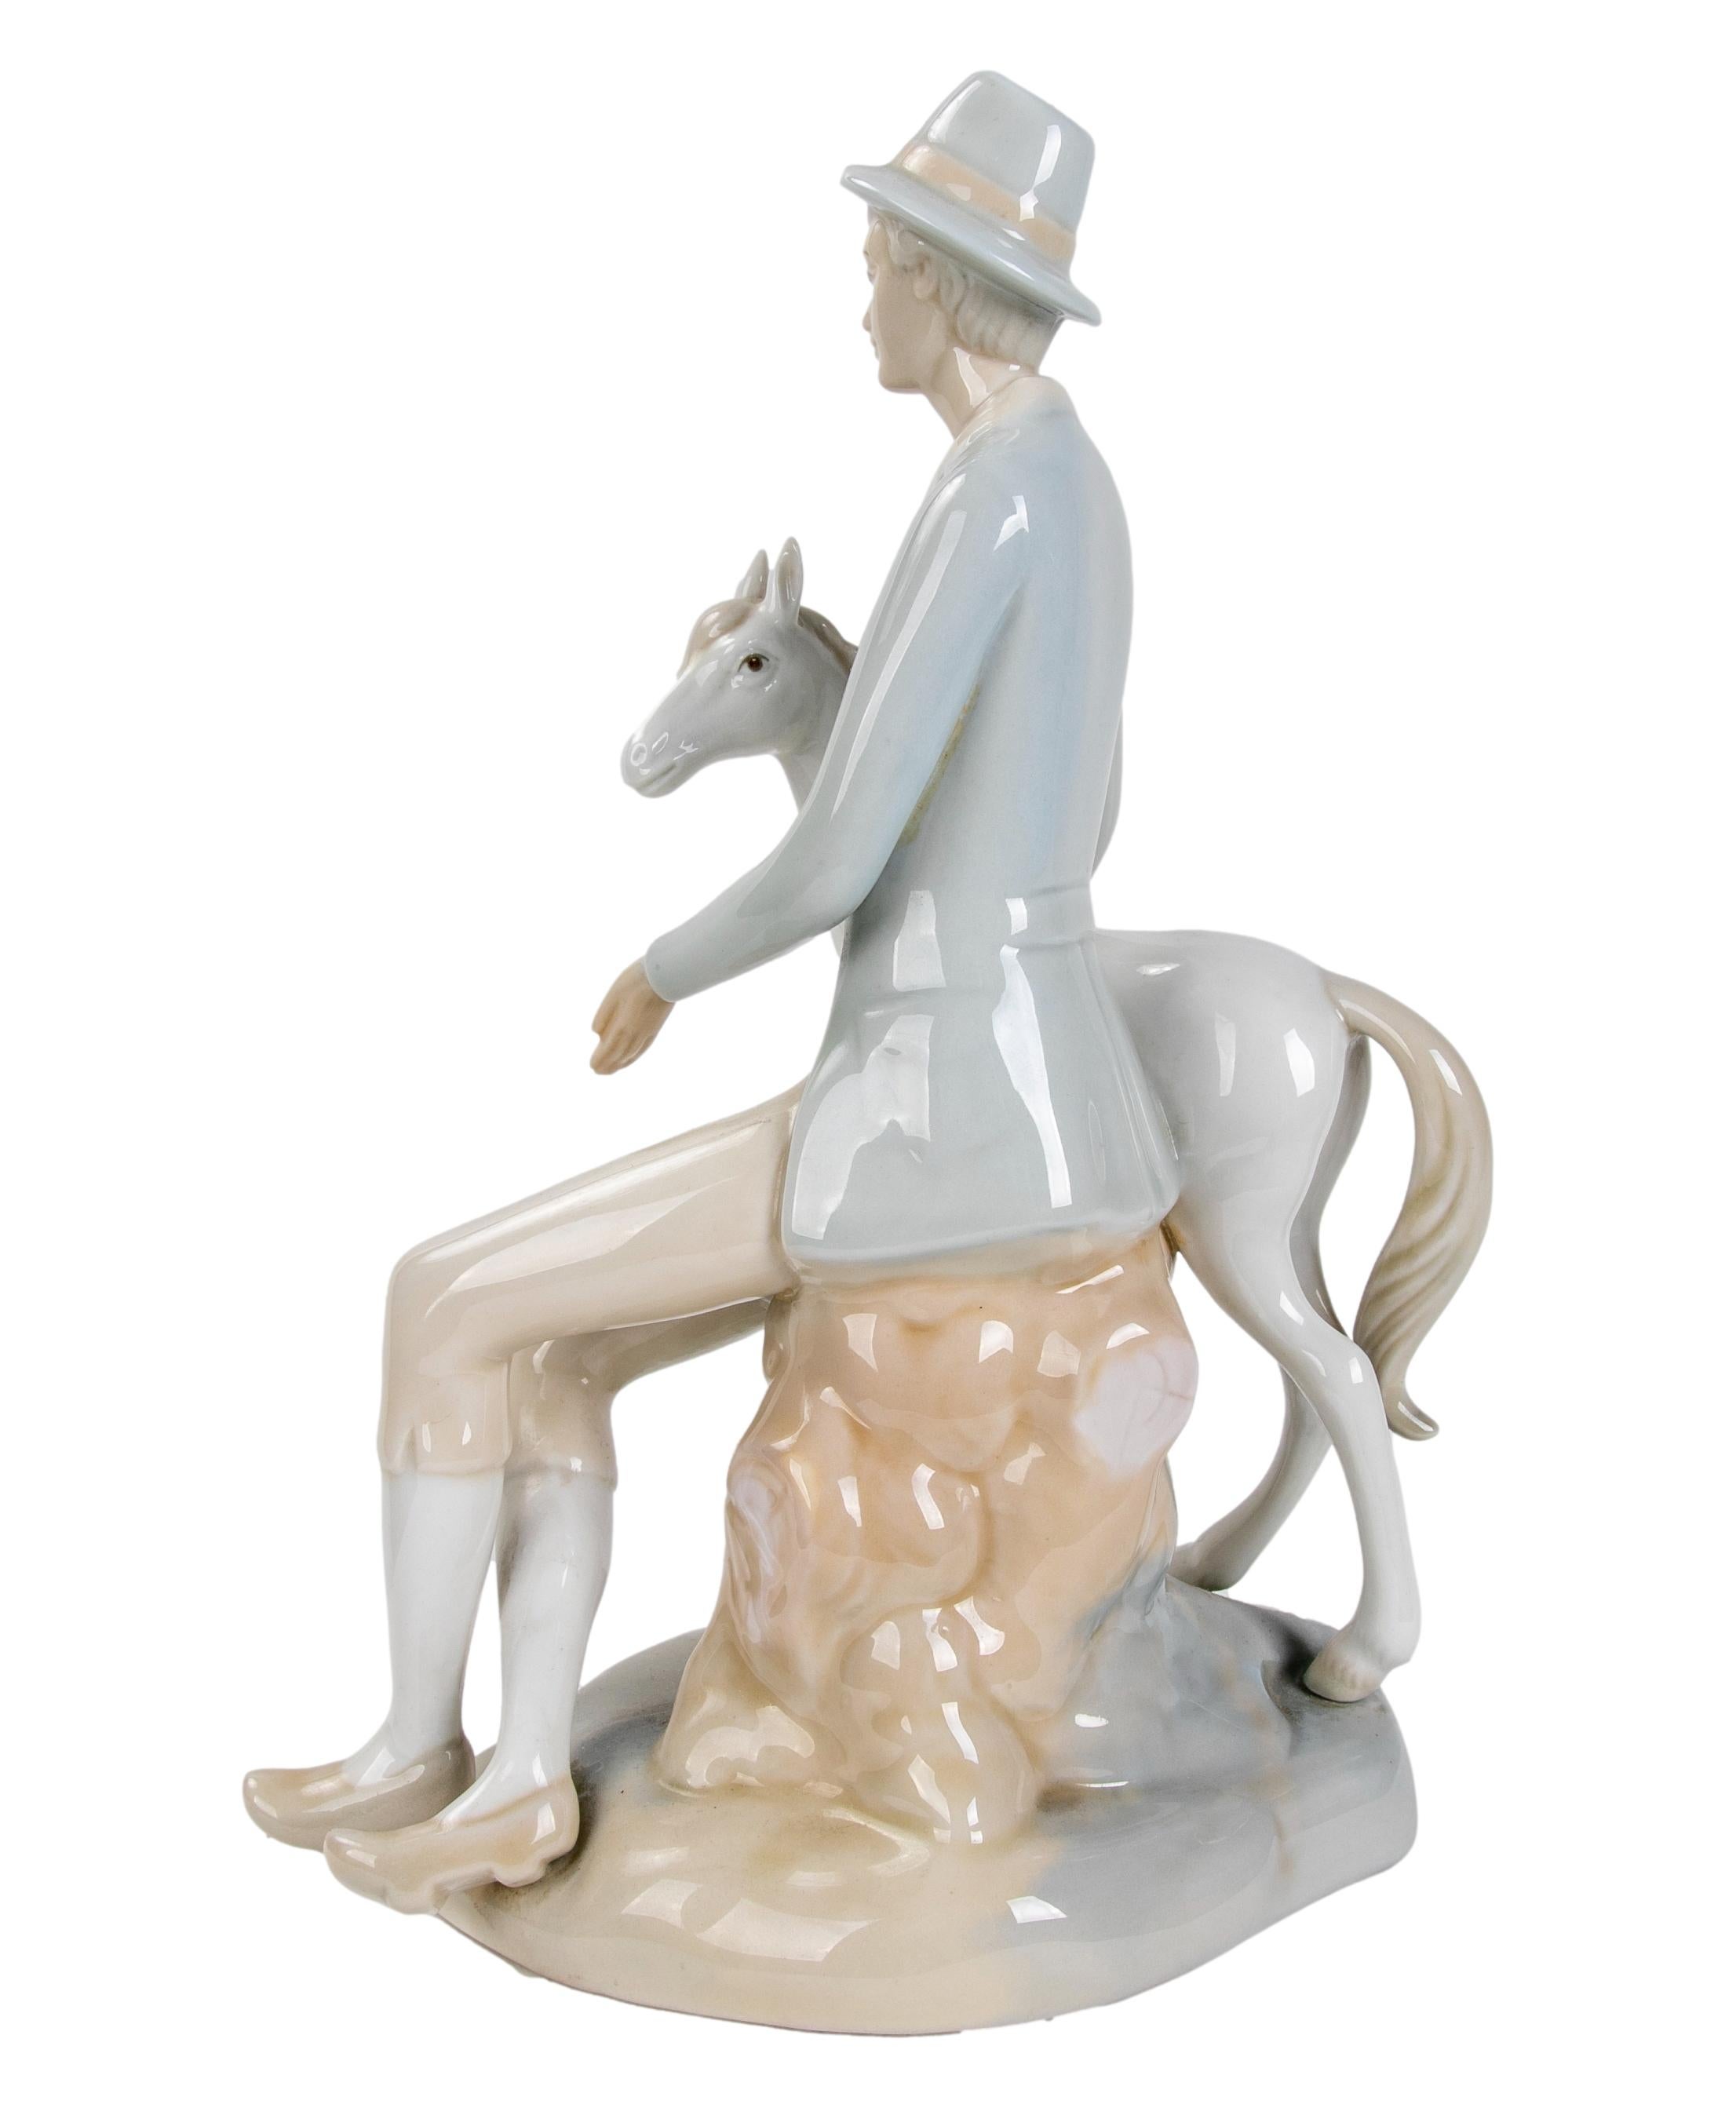 1980s Porcelain figure by LLadro 
It has a small break in the hat.